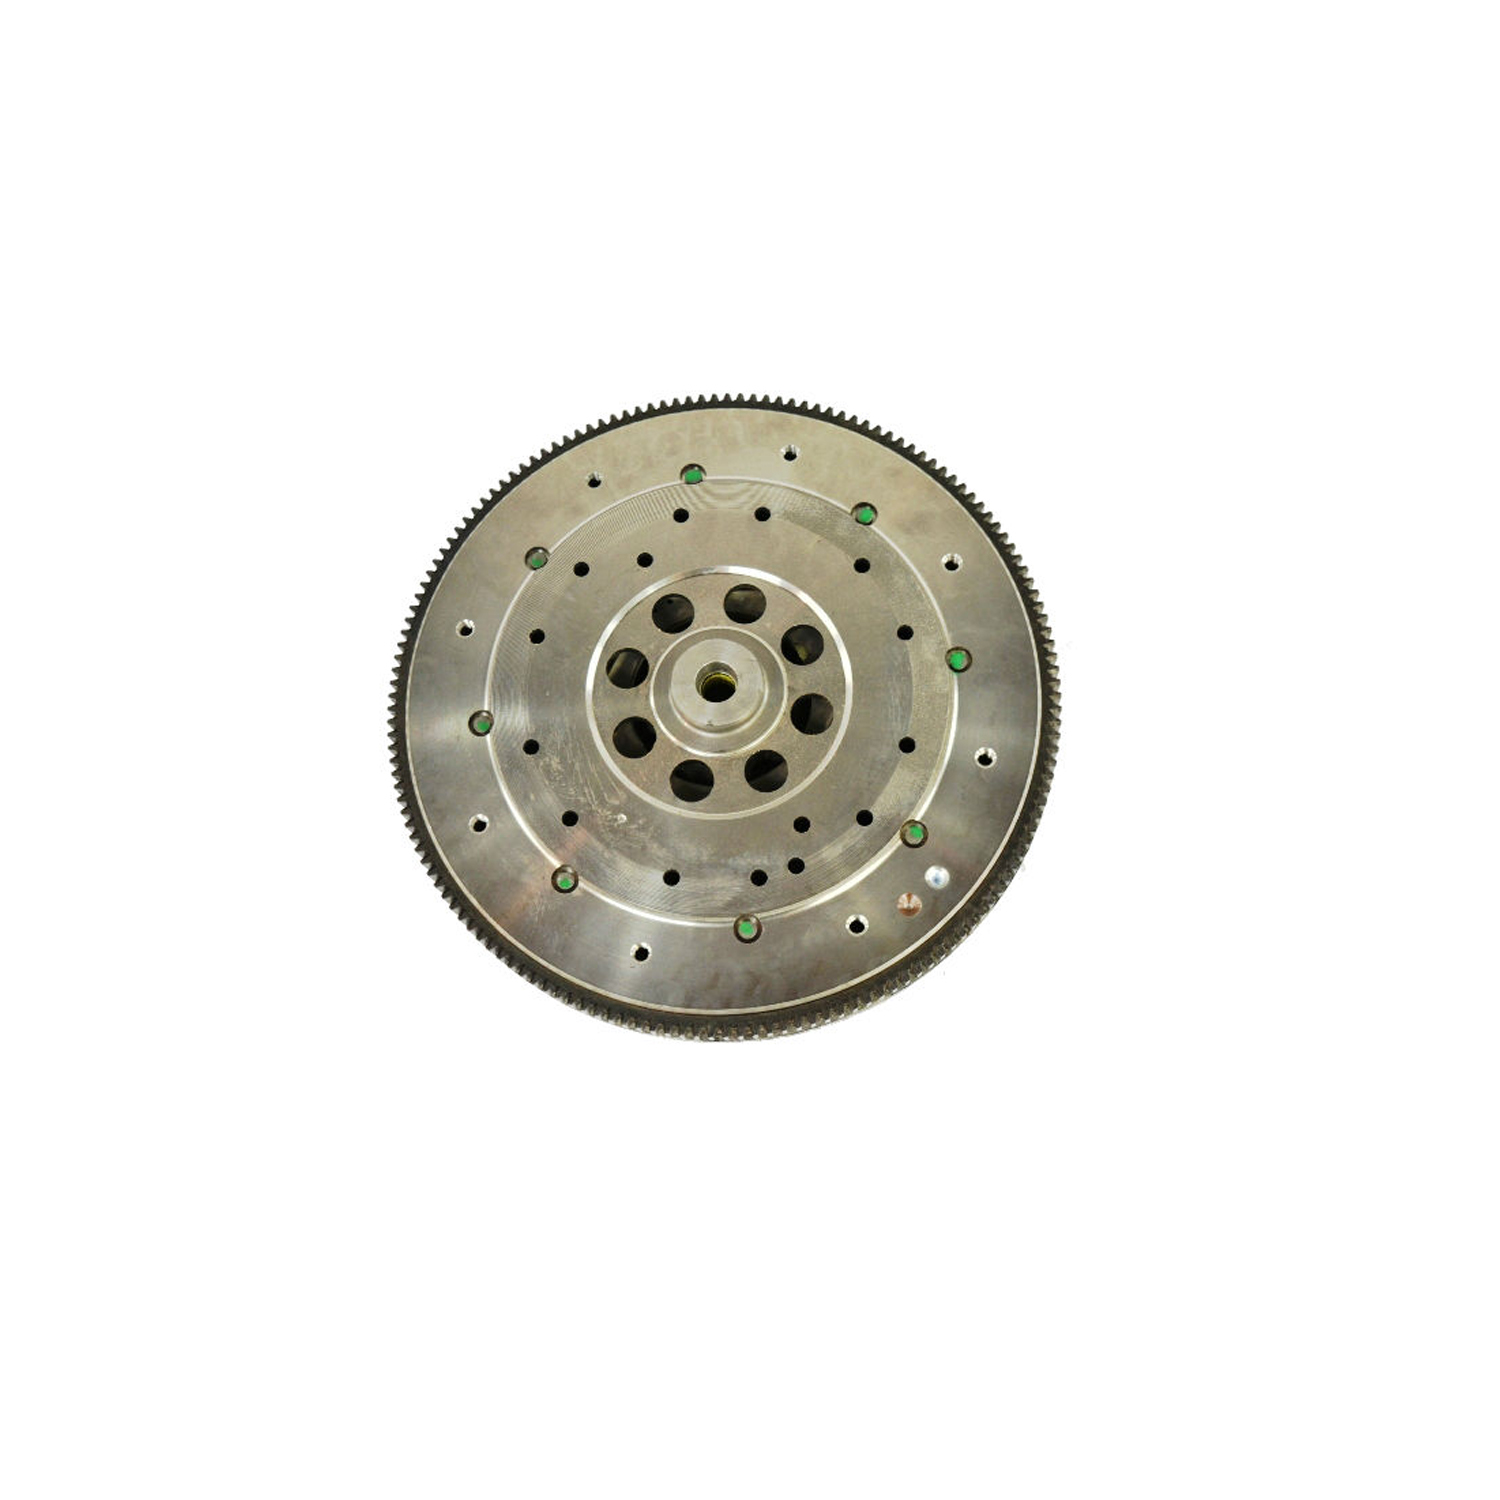 MOPAR PARTS - Clutch Flywheel - MOP 52104721AG